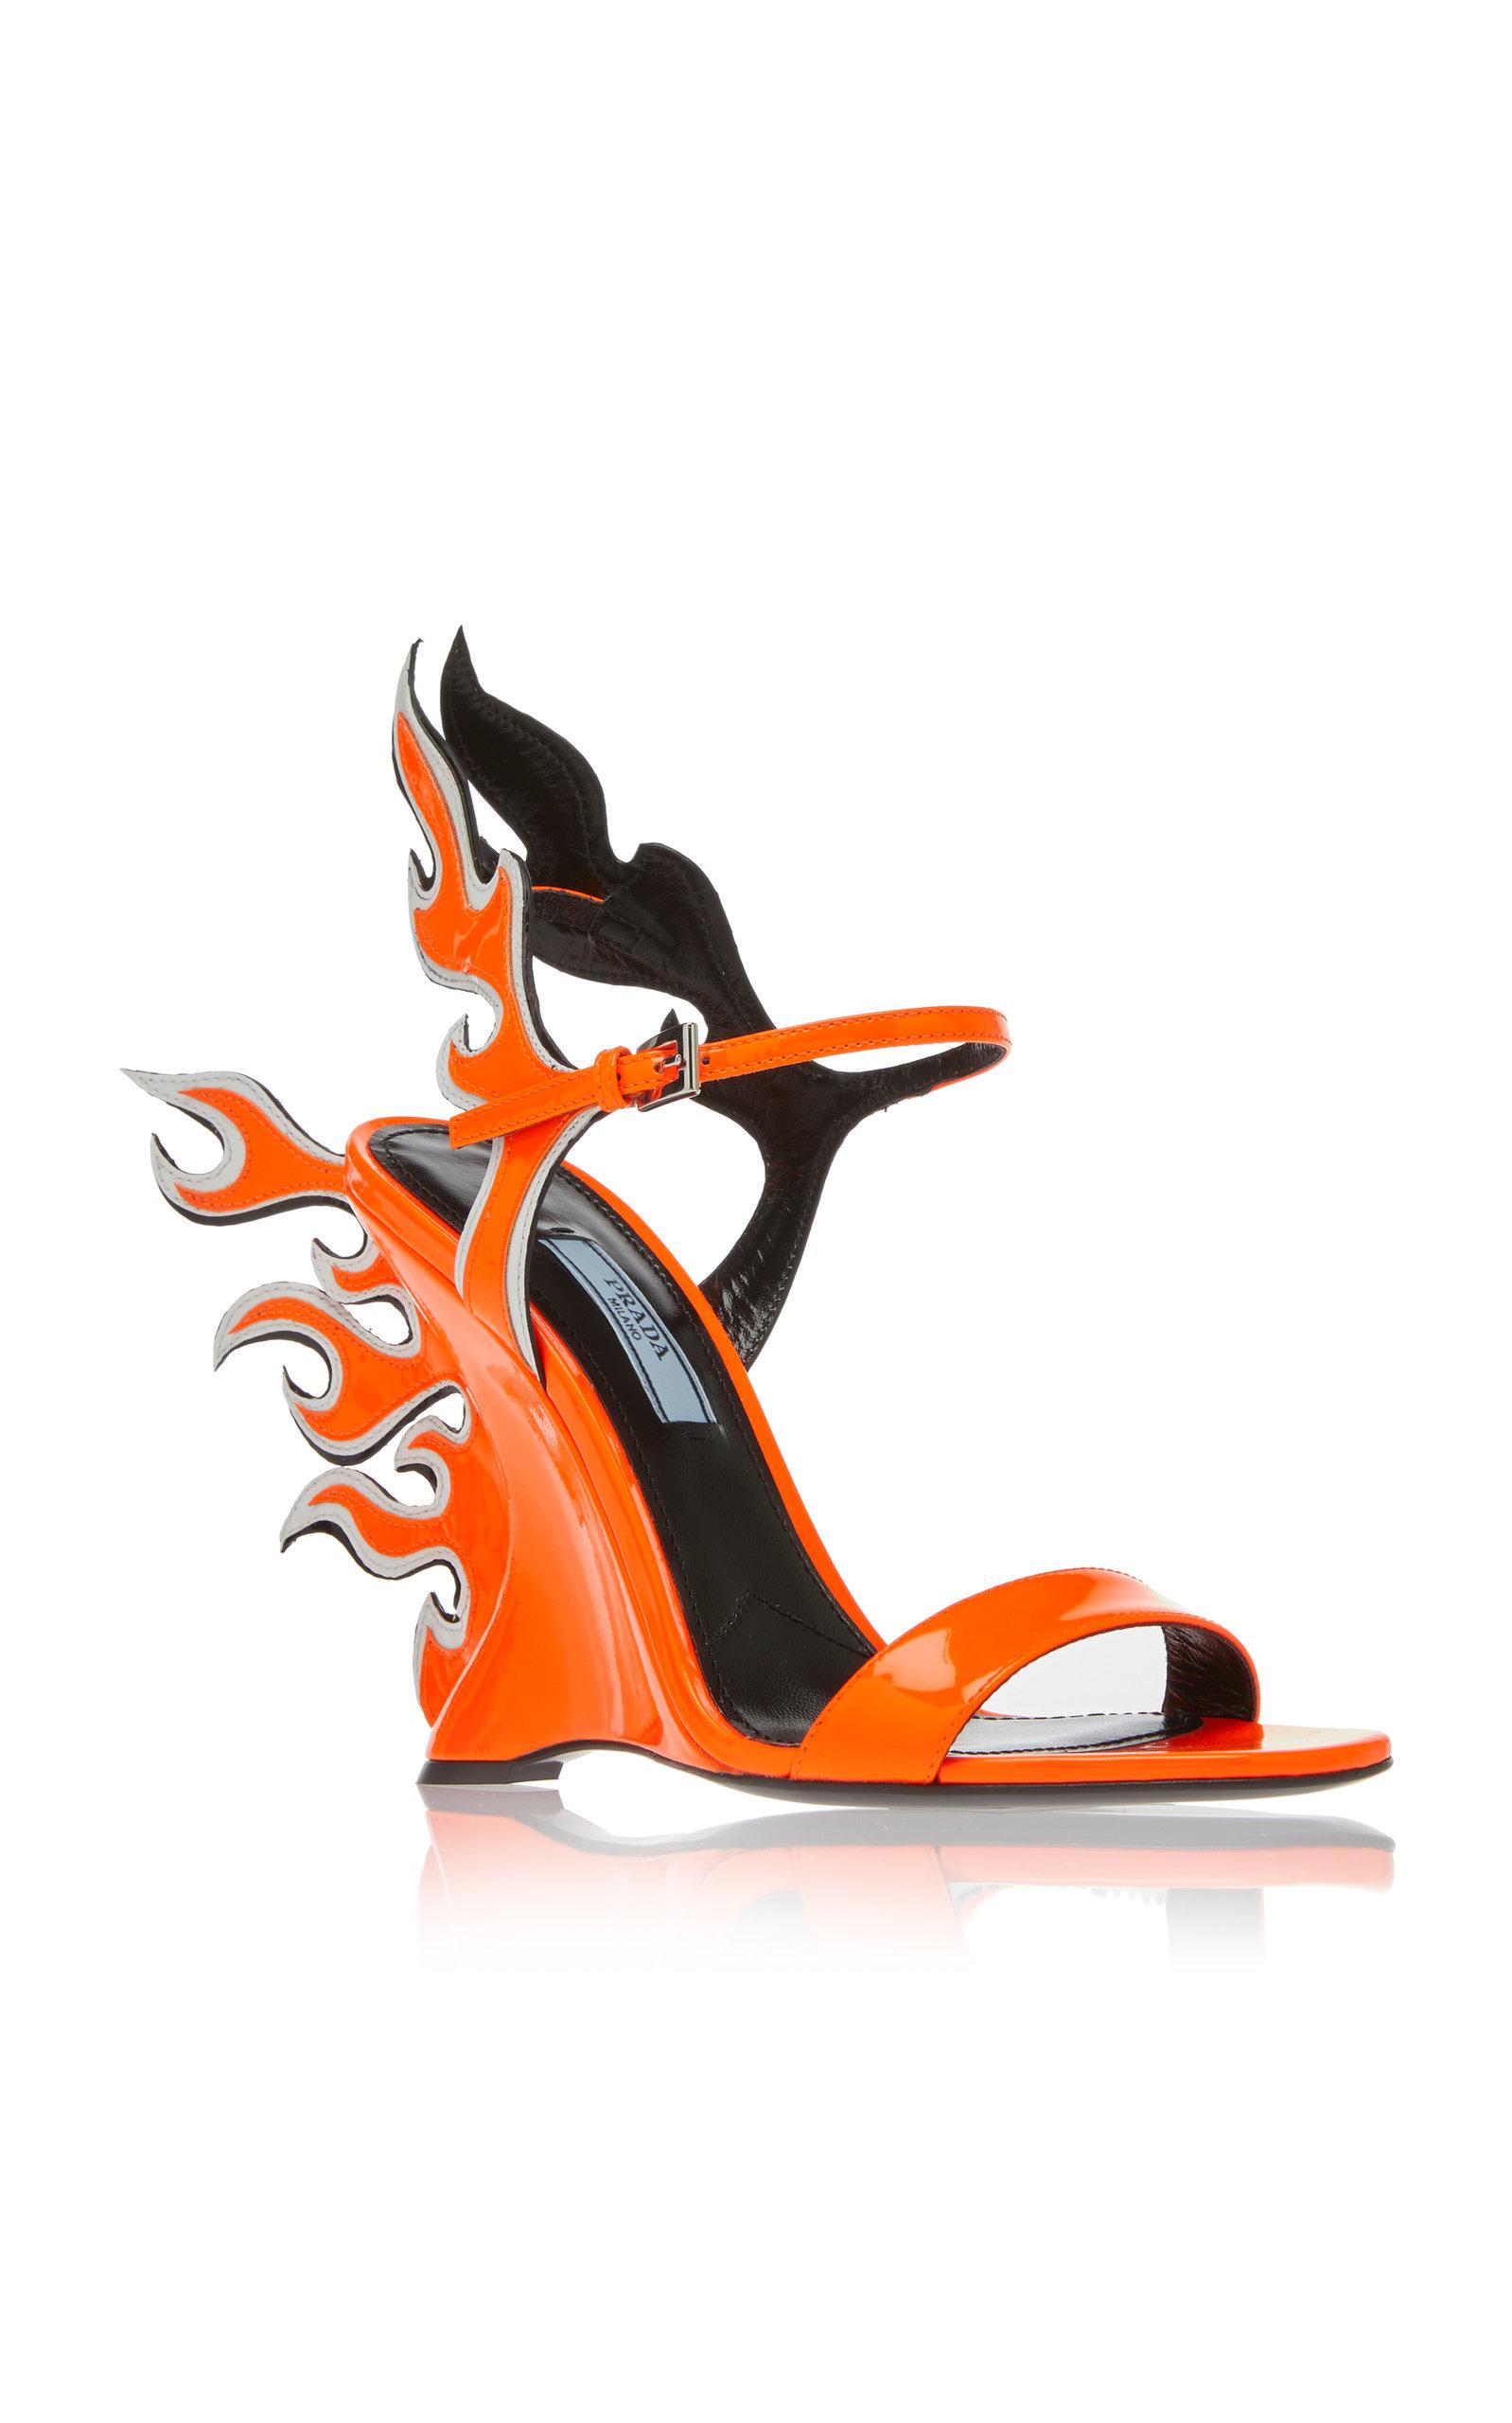 Prada Flame Patent Leather Wedge Sandals in Orange - Lyst